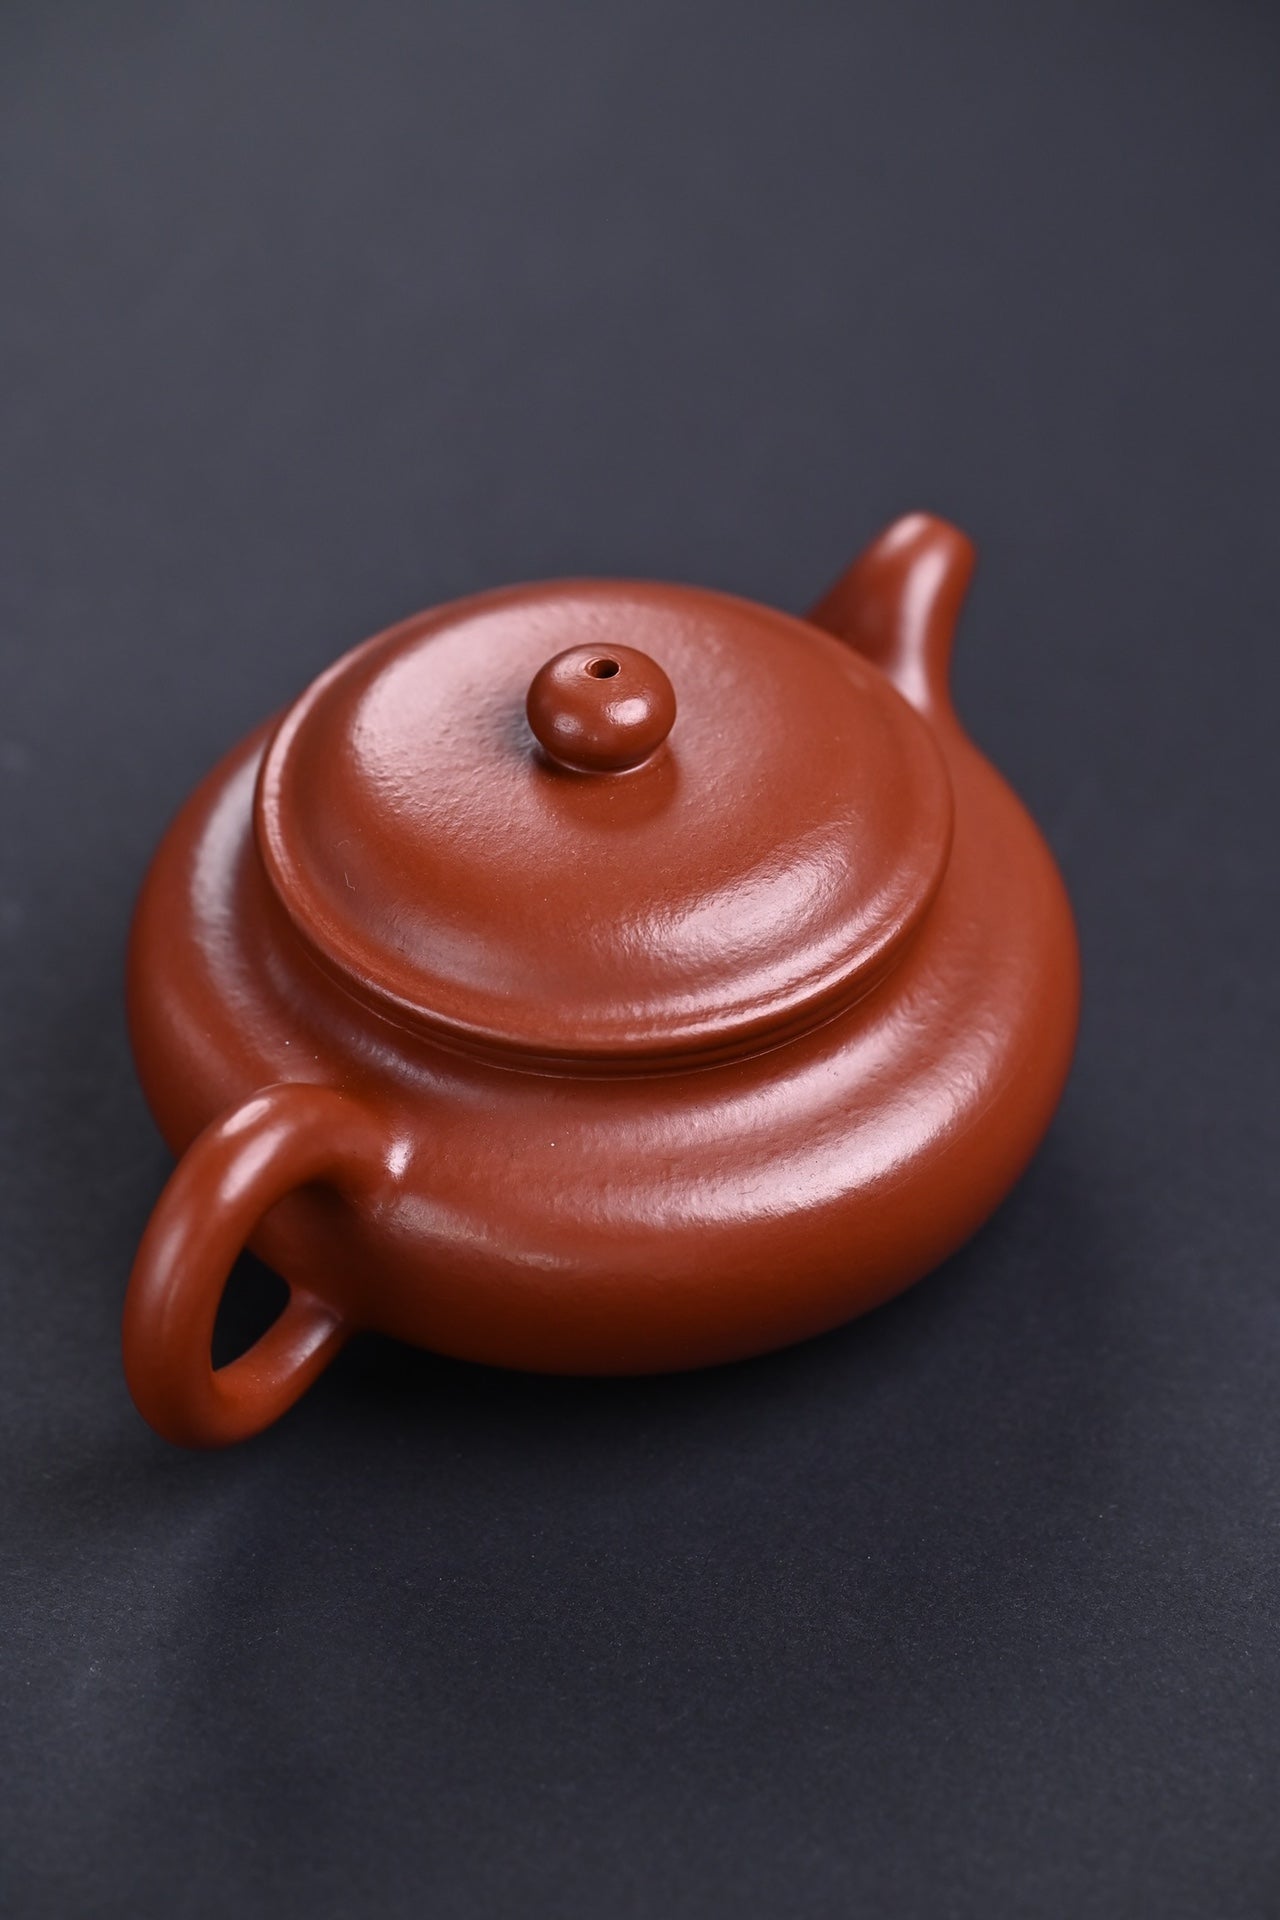 Seiko vermilion clay antique purple clay teapot